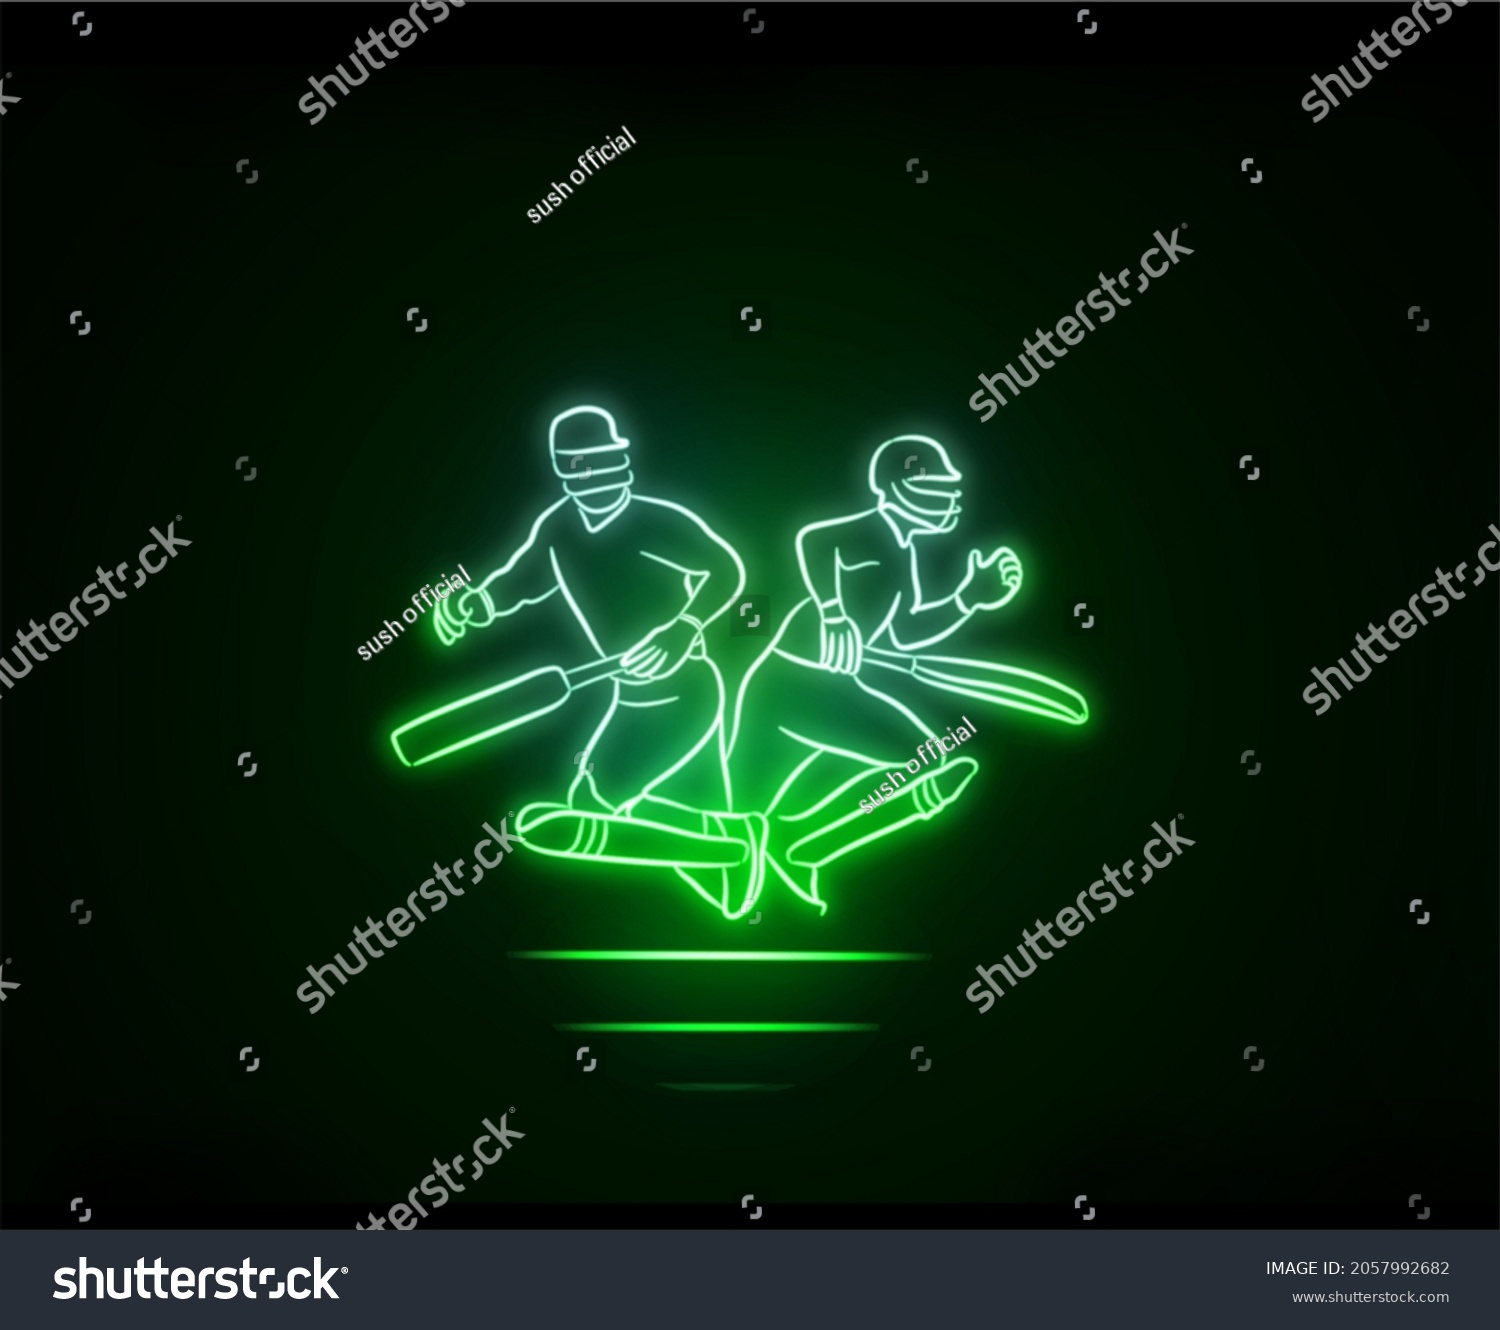 SVG of cricket player neon two player running batsmen  svg